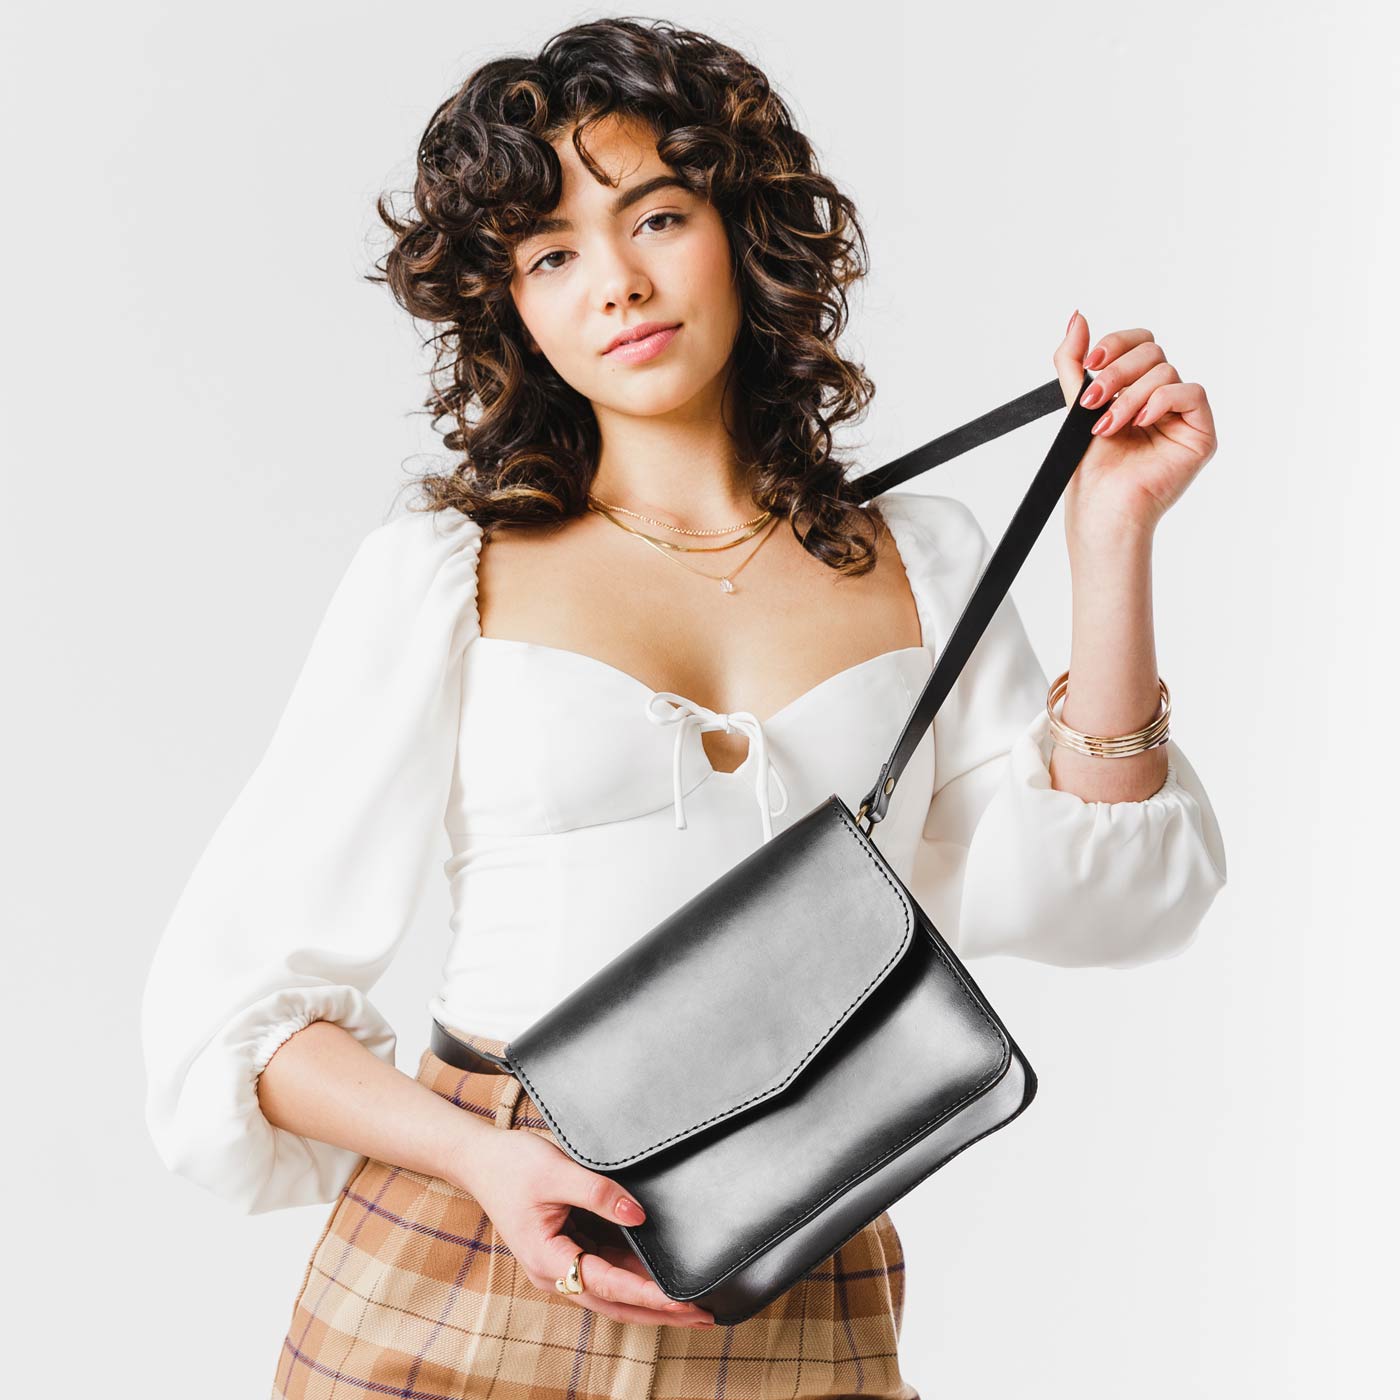  jessie Patent Leather Structured Shoulder Handbag